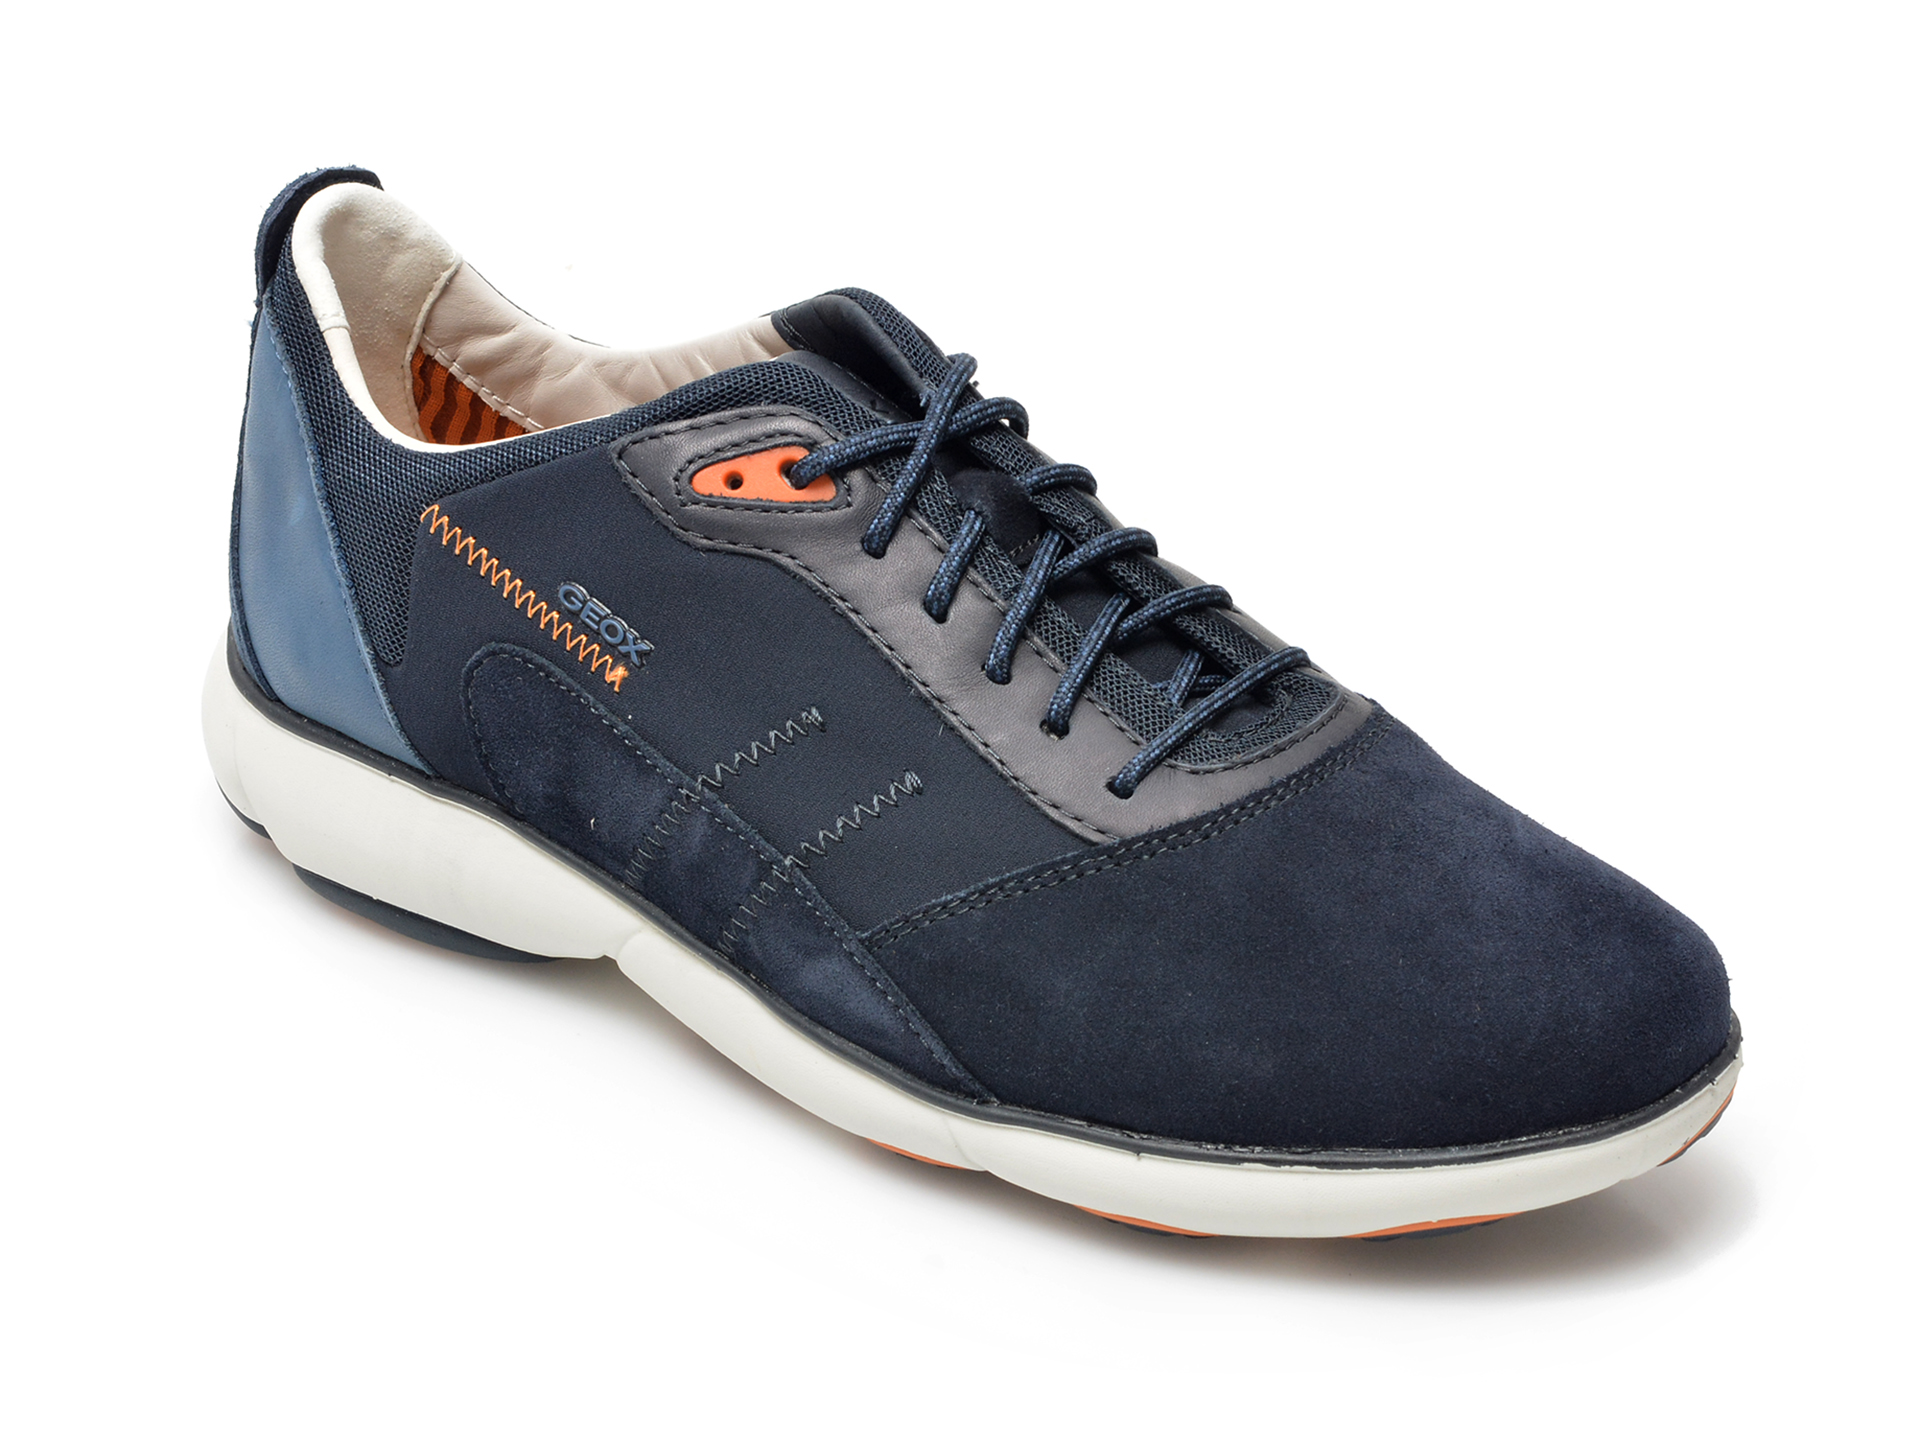 Pantofi GEOX bleumarin, U25D7C, din material textil si piele naturala Geox Geox